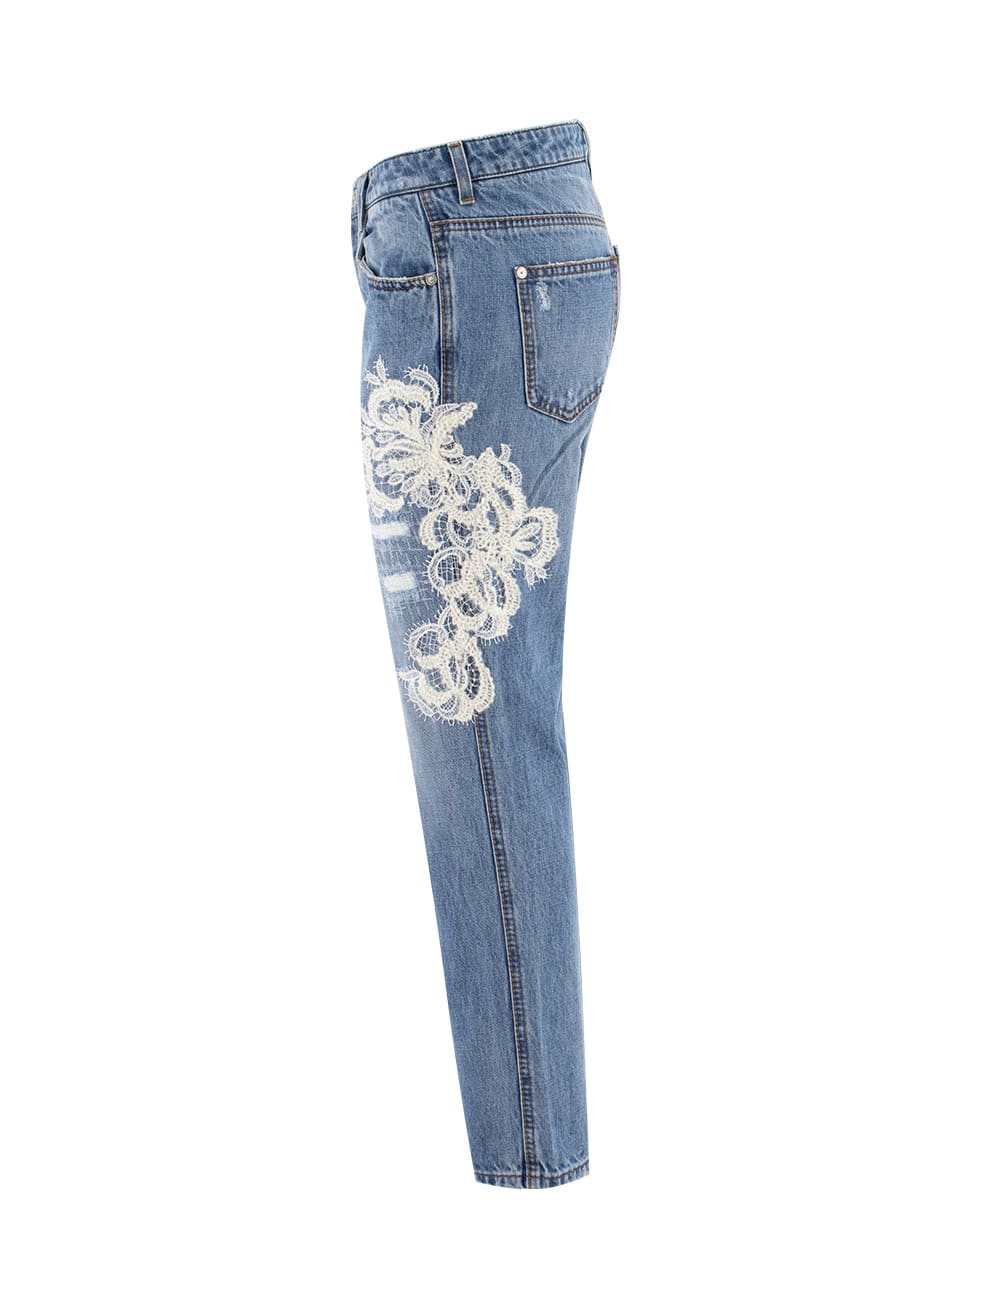 Shop Ermanno Scervino Jeans In Bright Cobalt